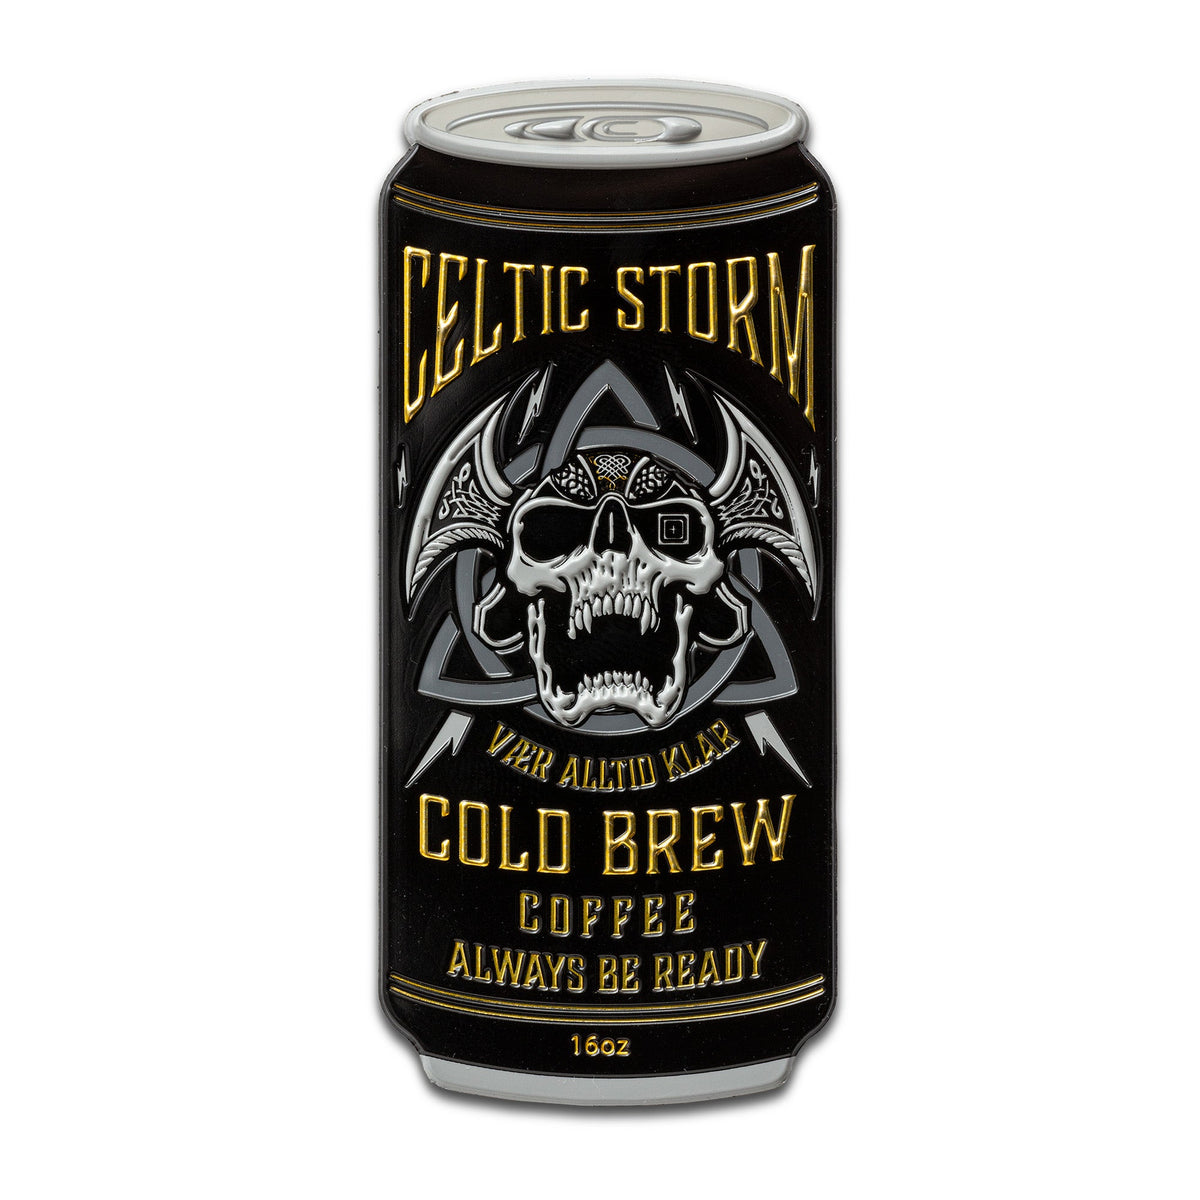 5.11 Tactical Celtic CB Coffee Patch Tactical Gear Australia Supplier Distributor Dealer